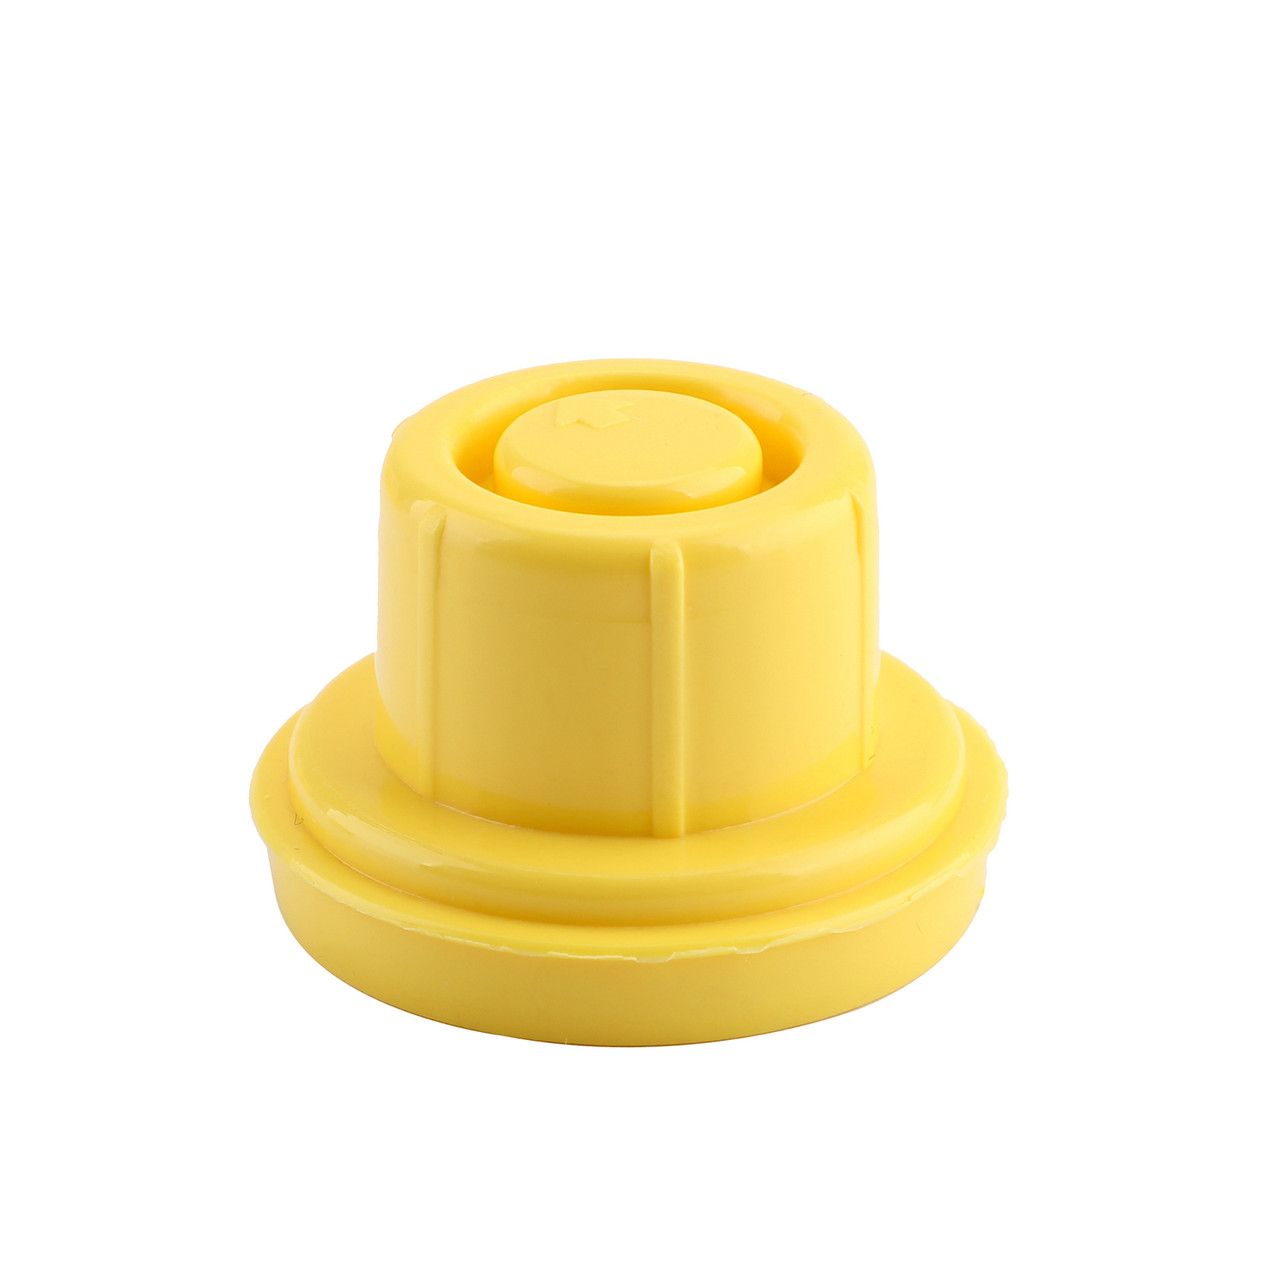 5x Yellow Spout Cap fits BLITZ self-venting gas can spouts 900302 900092 900094